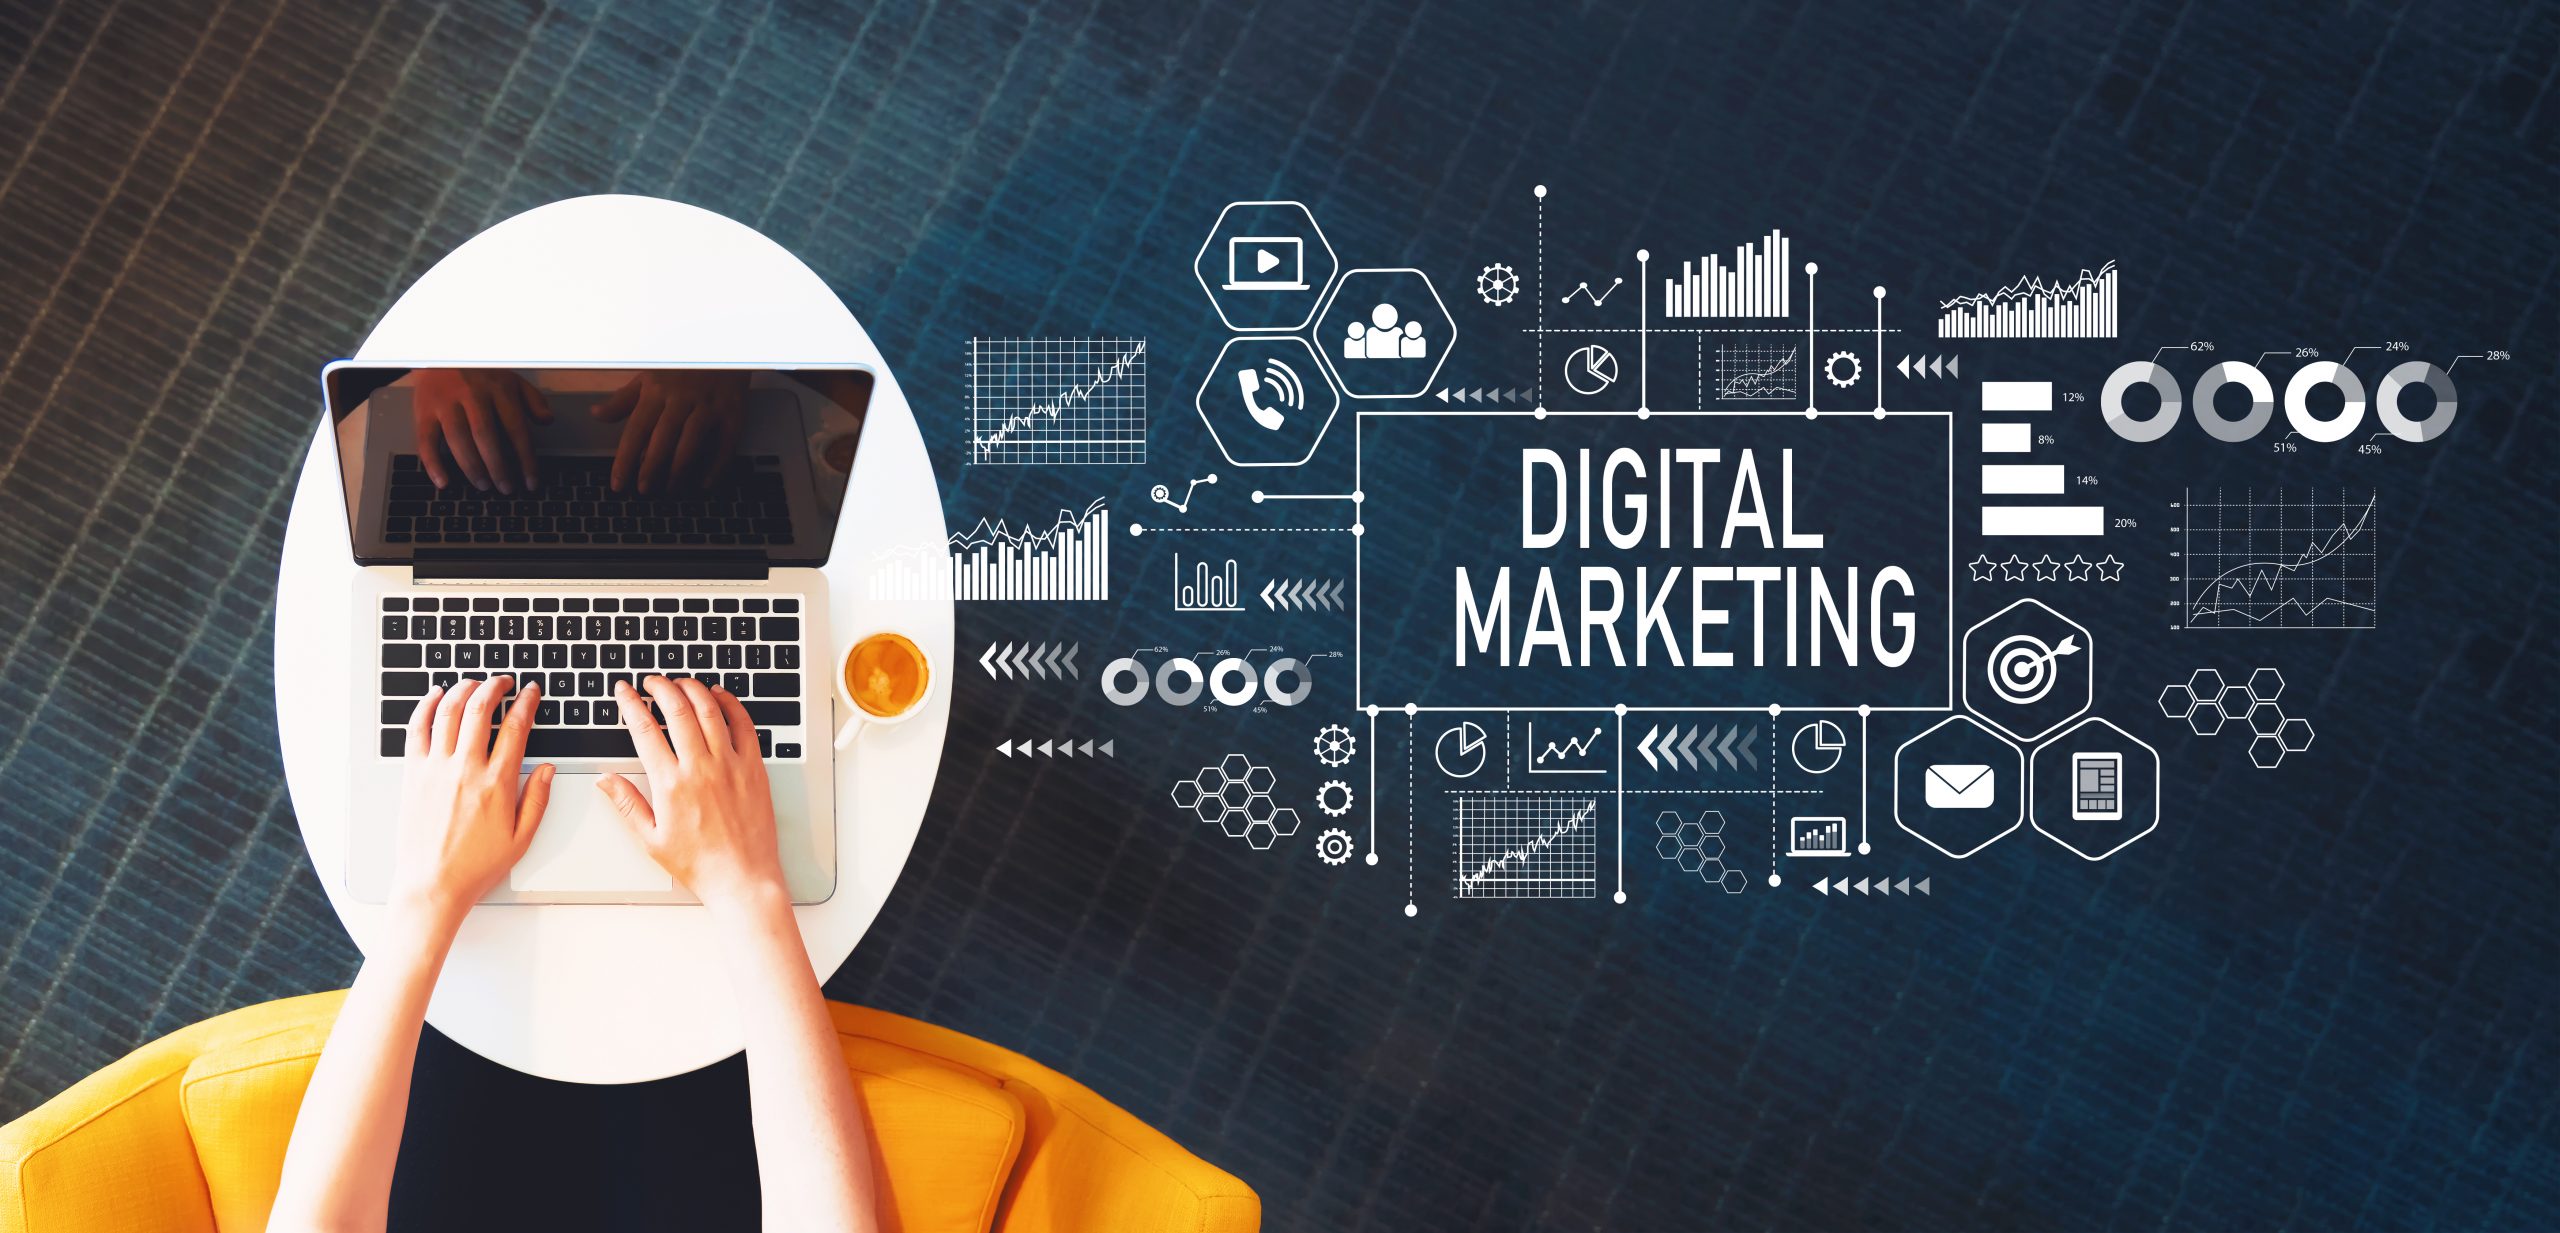 6 Key Digital Marketing Terms